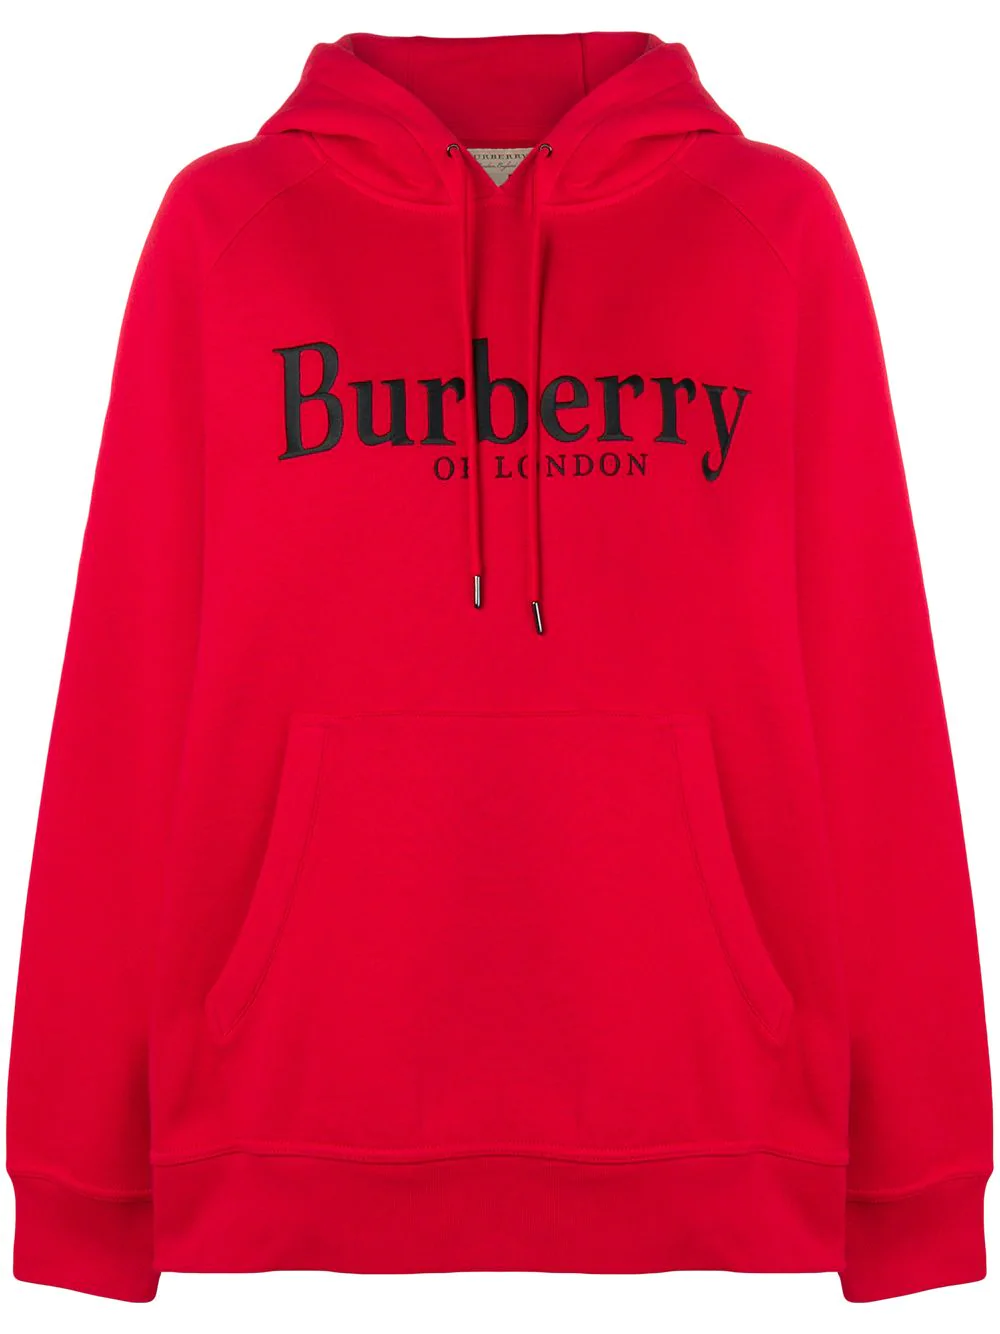 burberry sweatshirt red